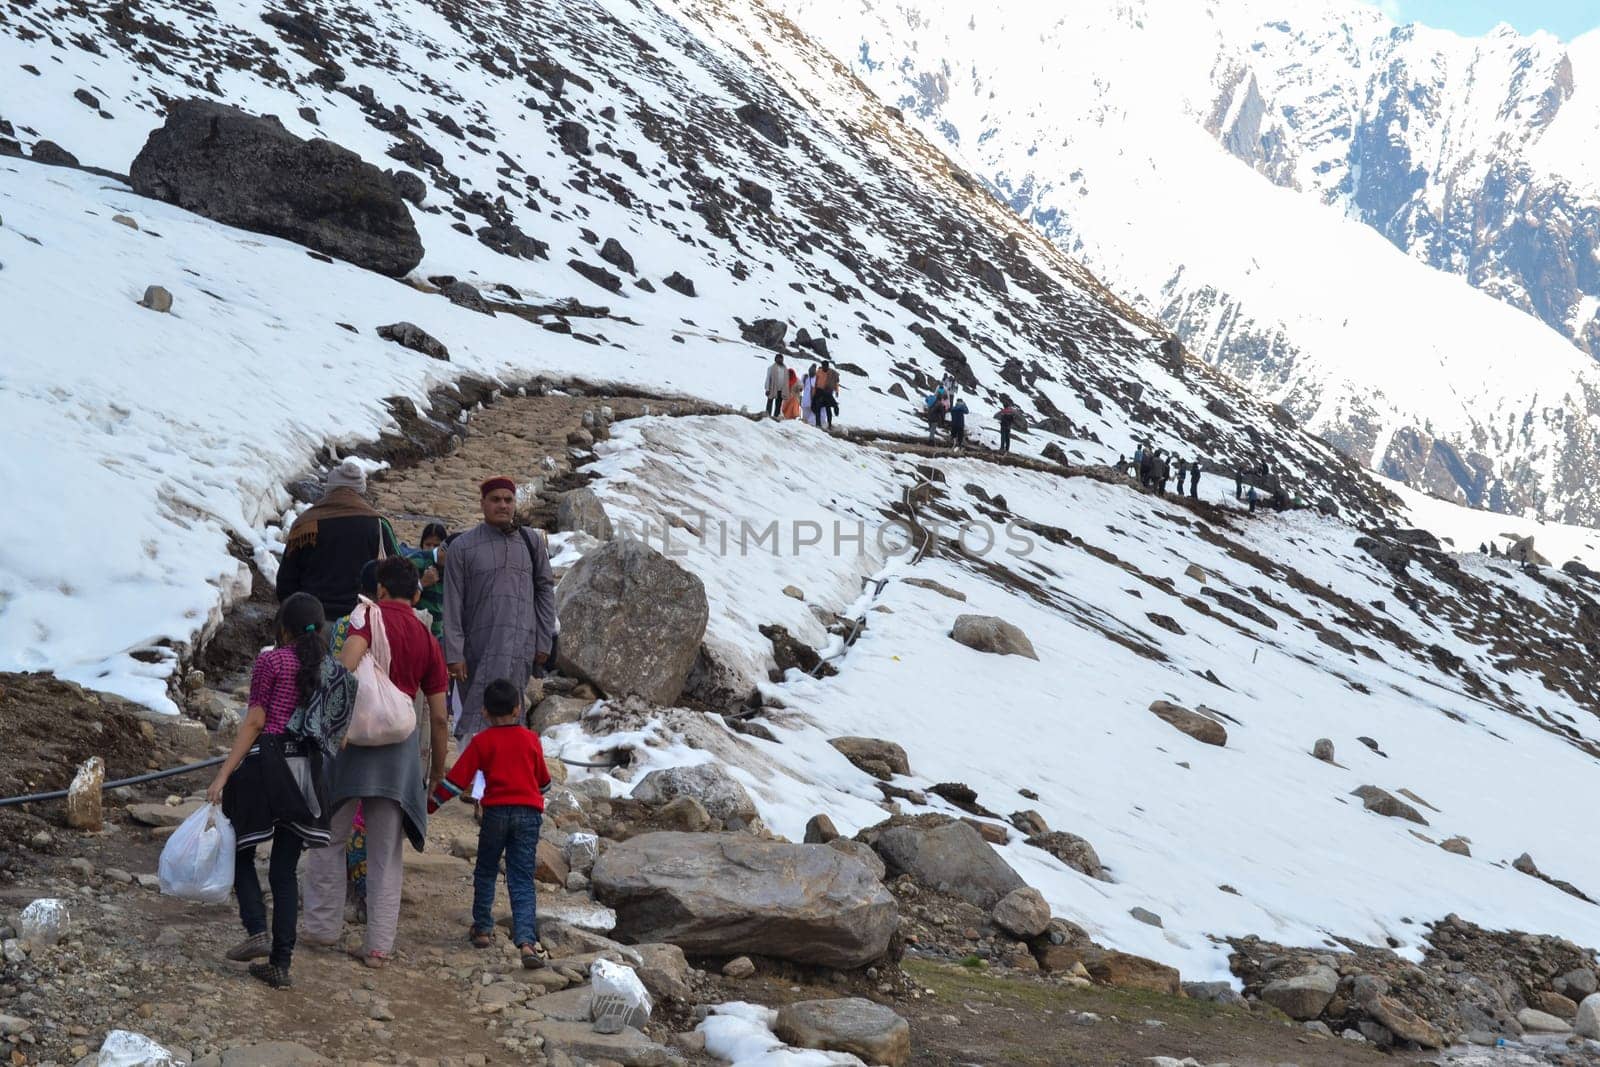 Pathway for pilgrims rebuilt after kedarnath disaster. by stocksvids